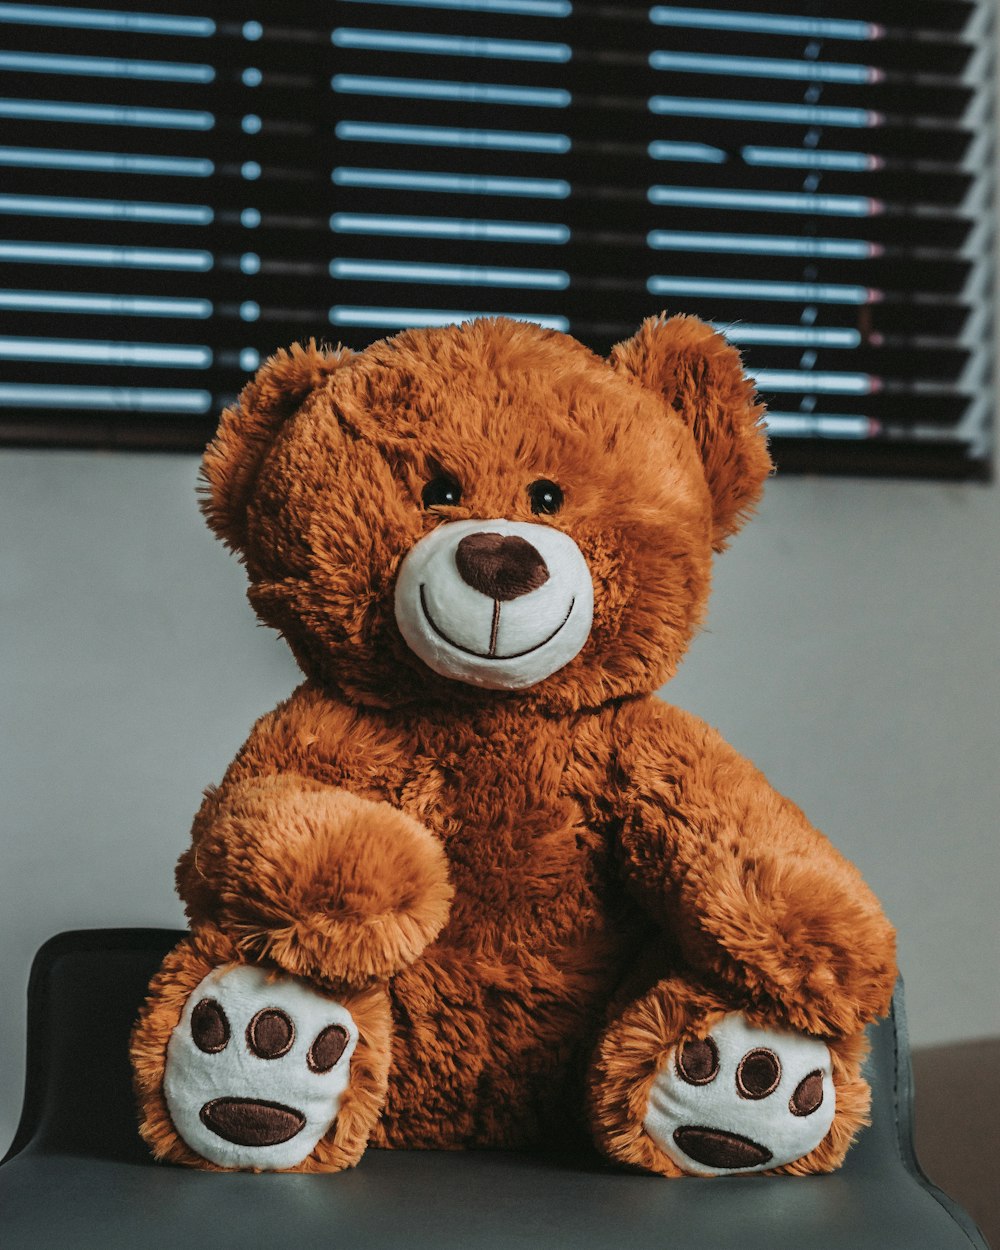 a brown teddy bear sitting on top of a desk